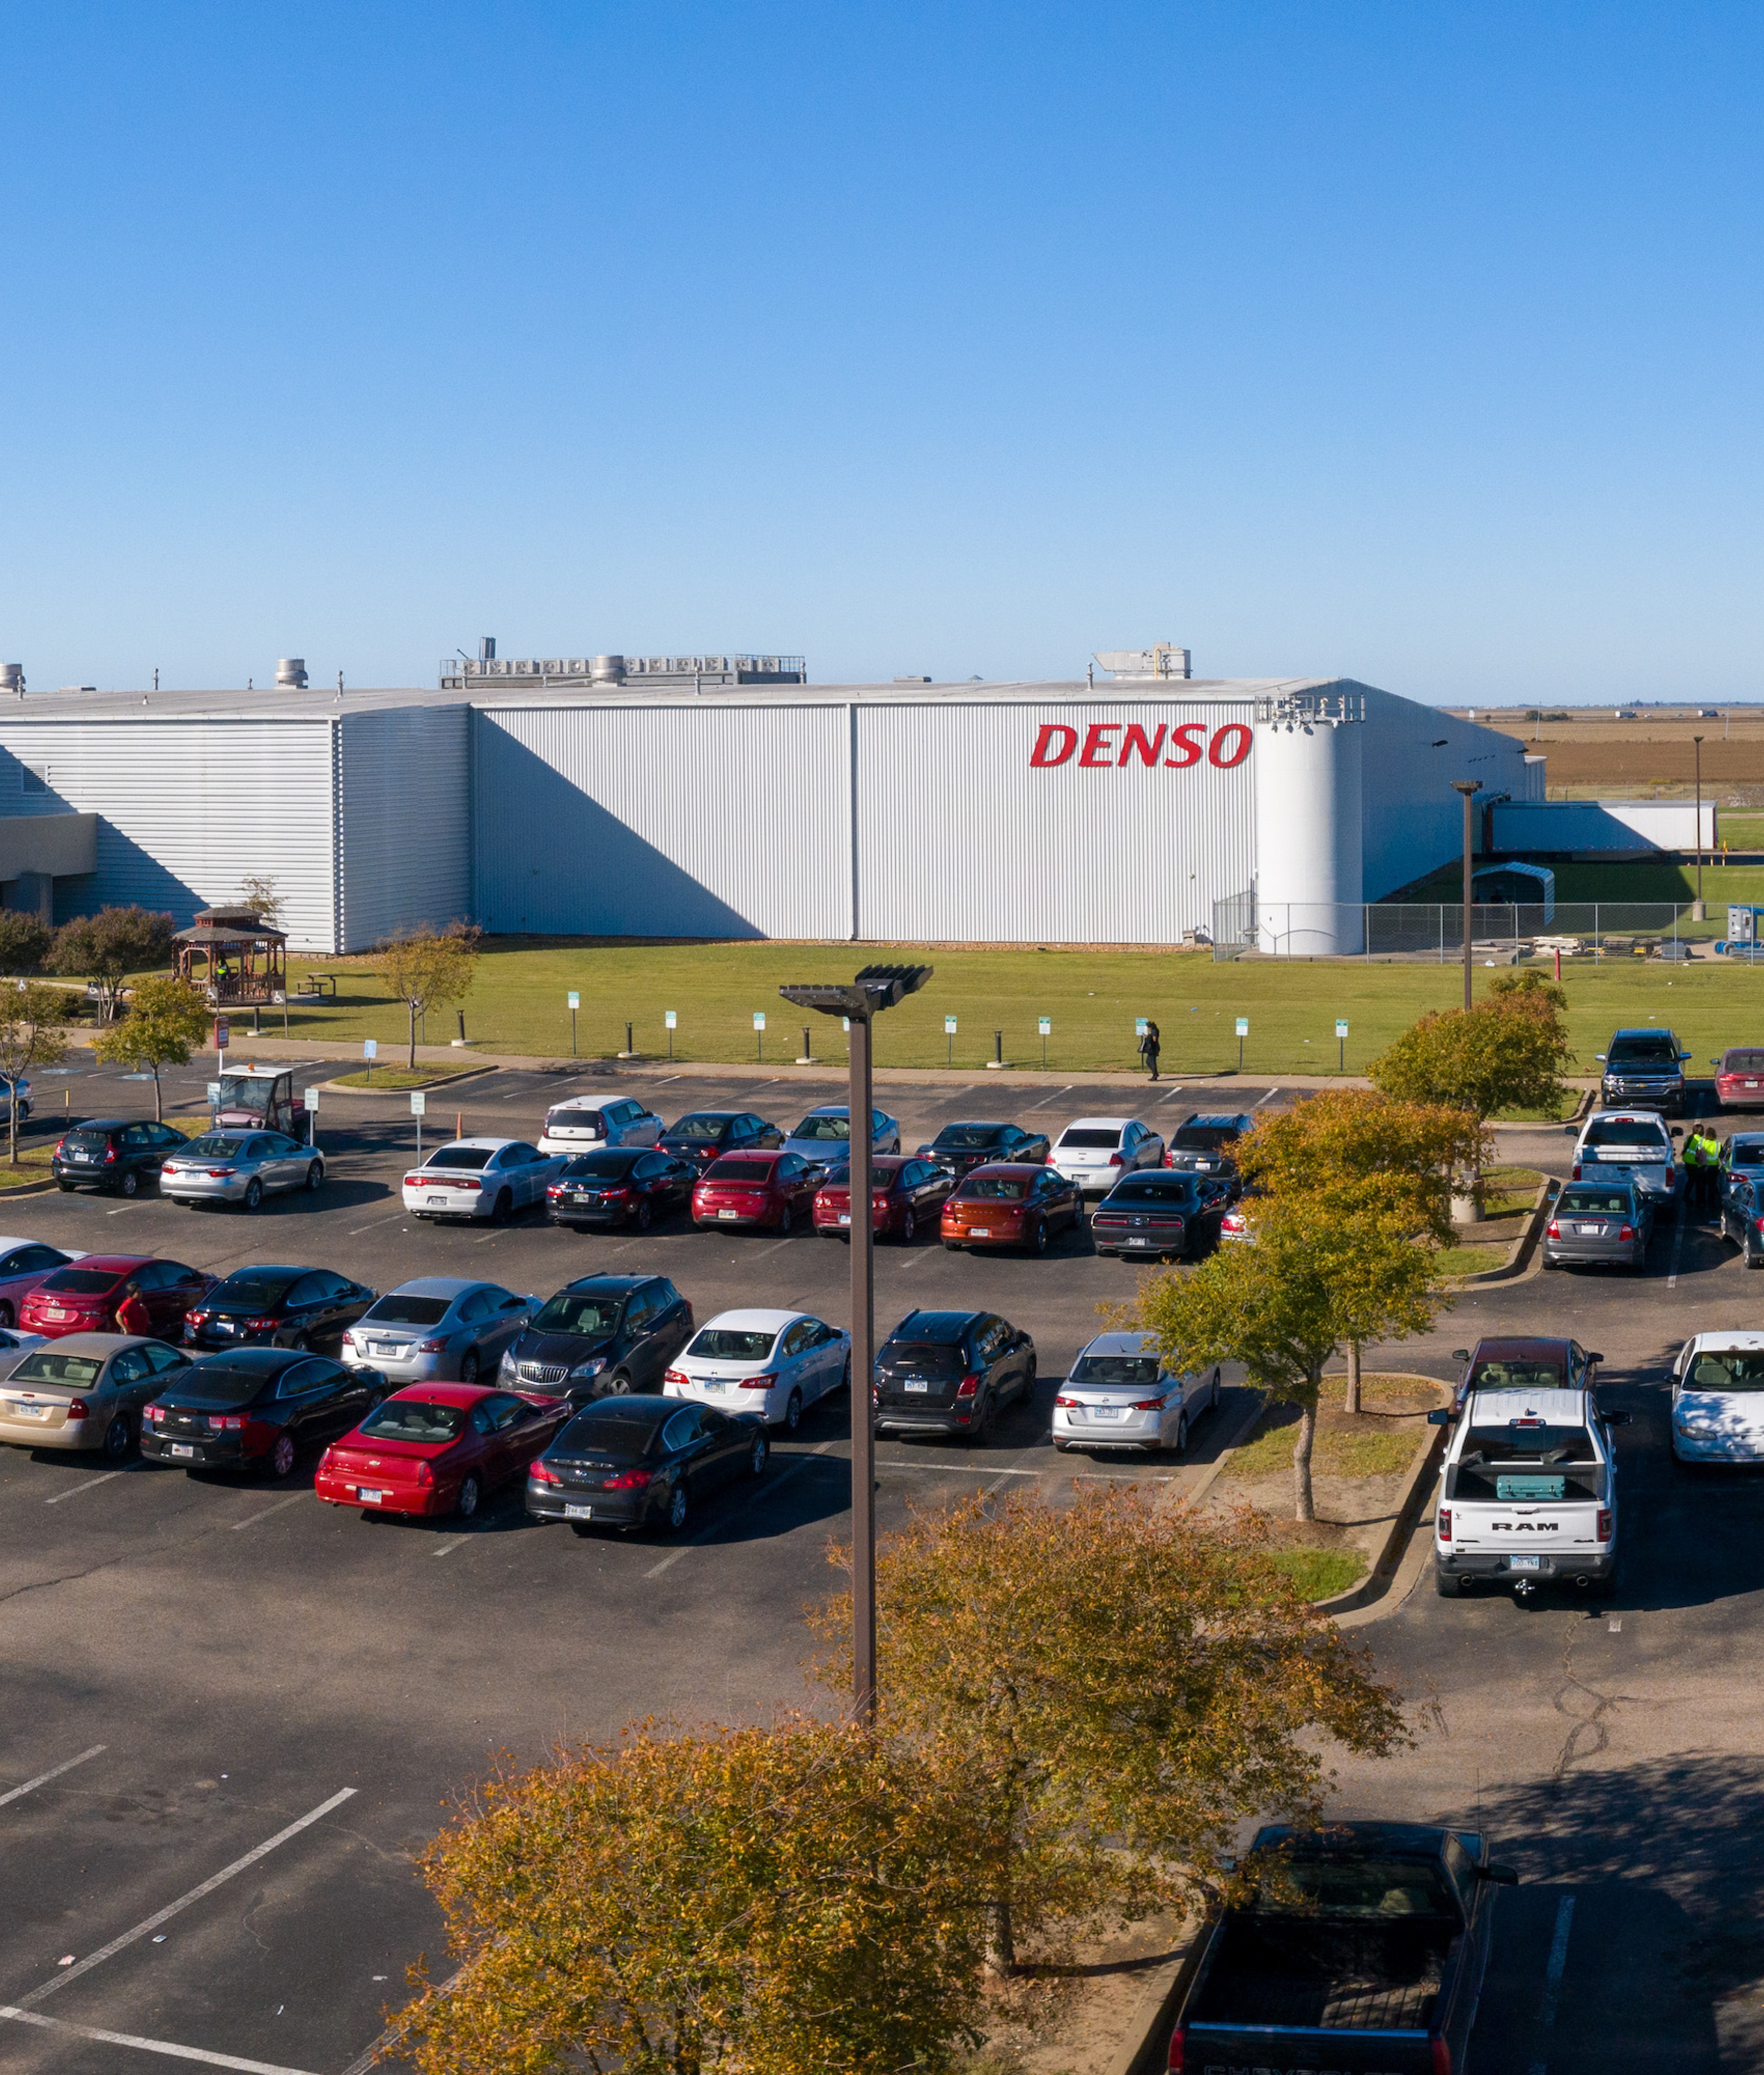 Denso's plant parking lot